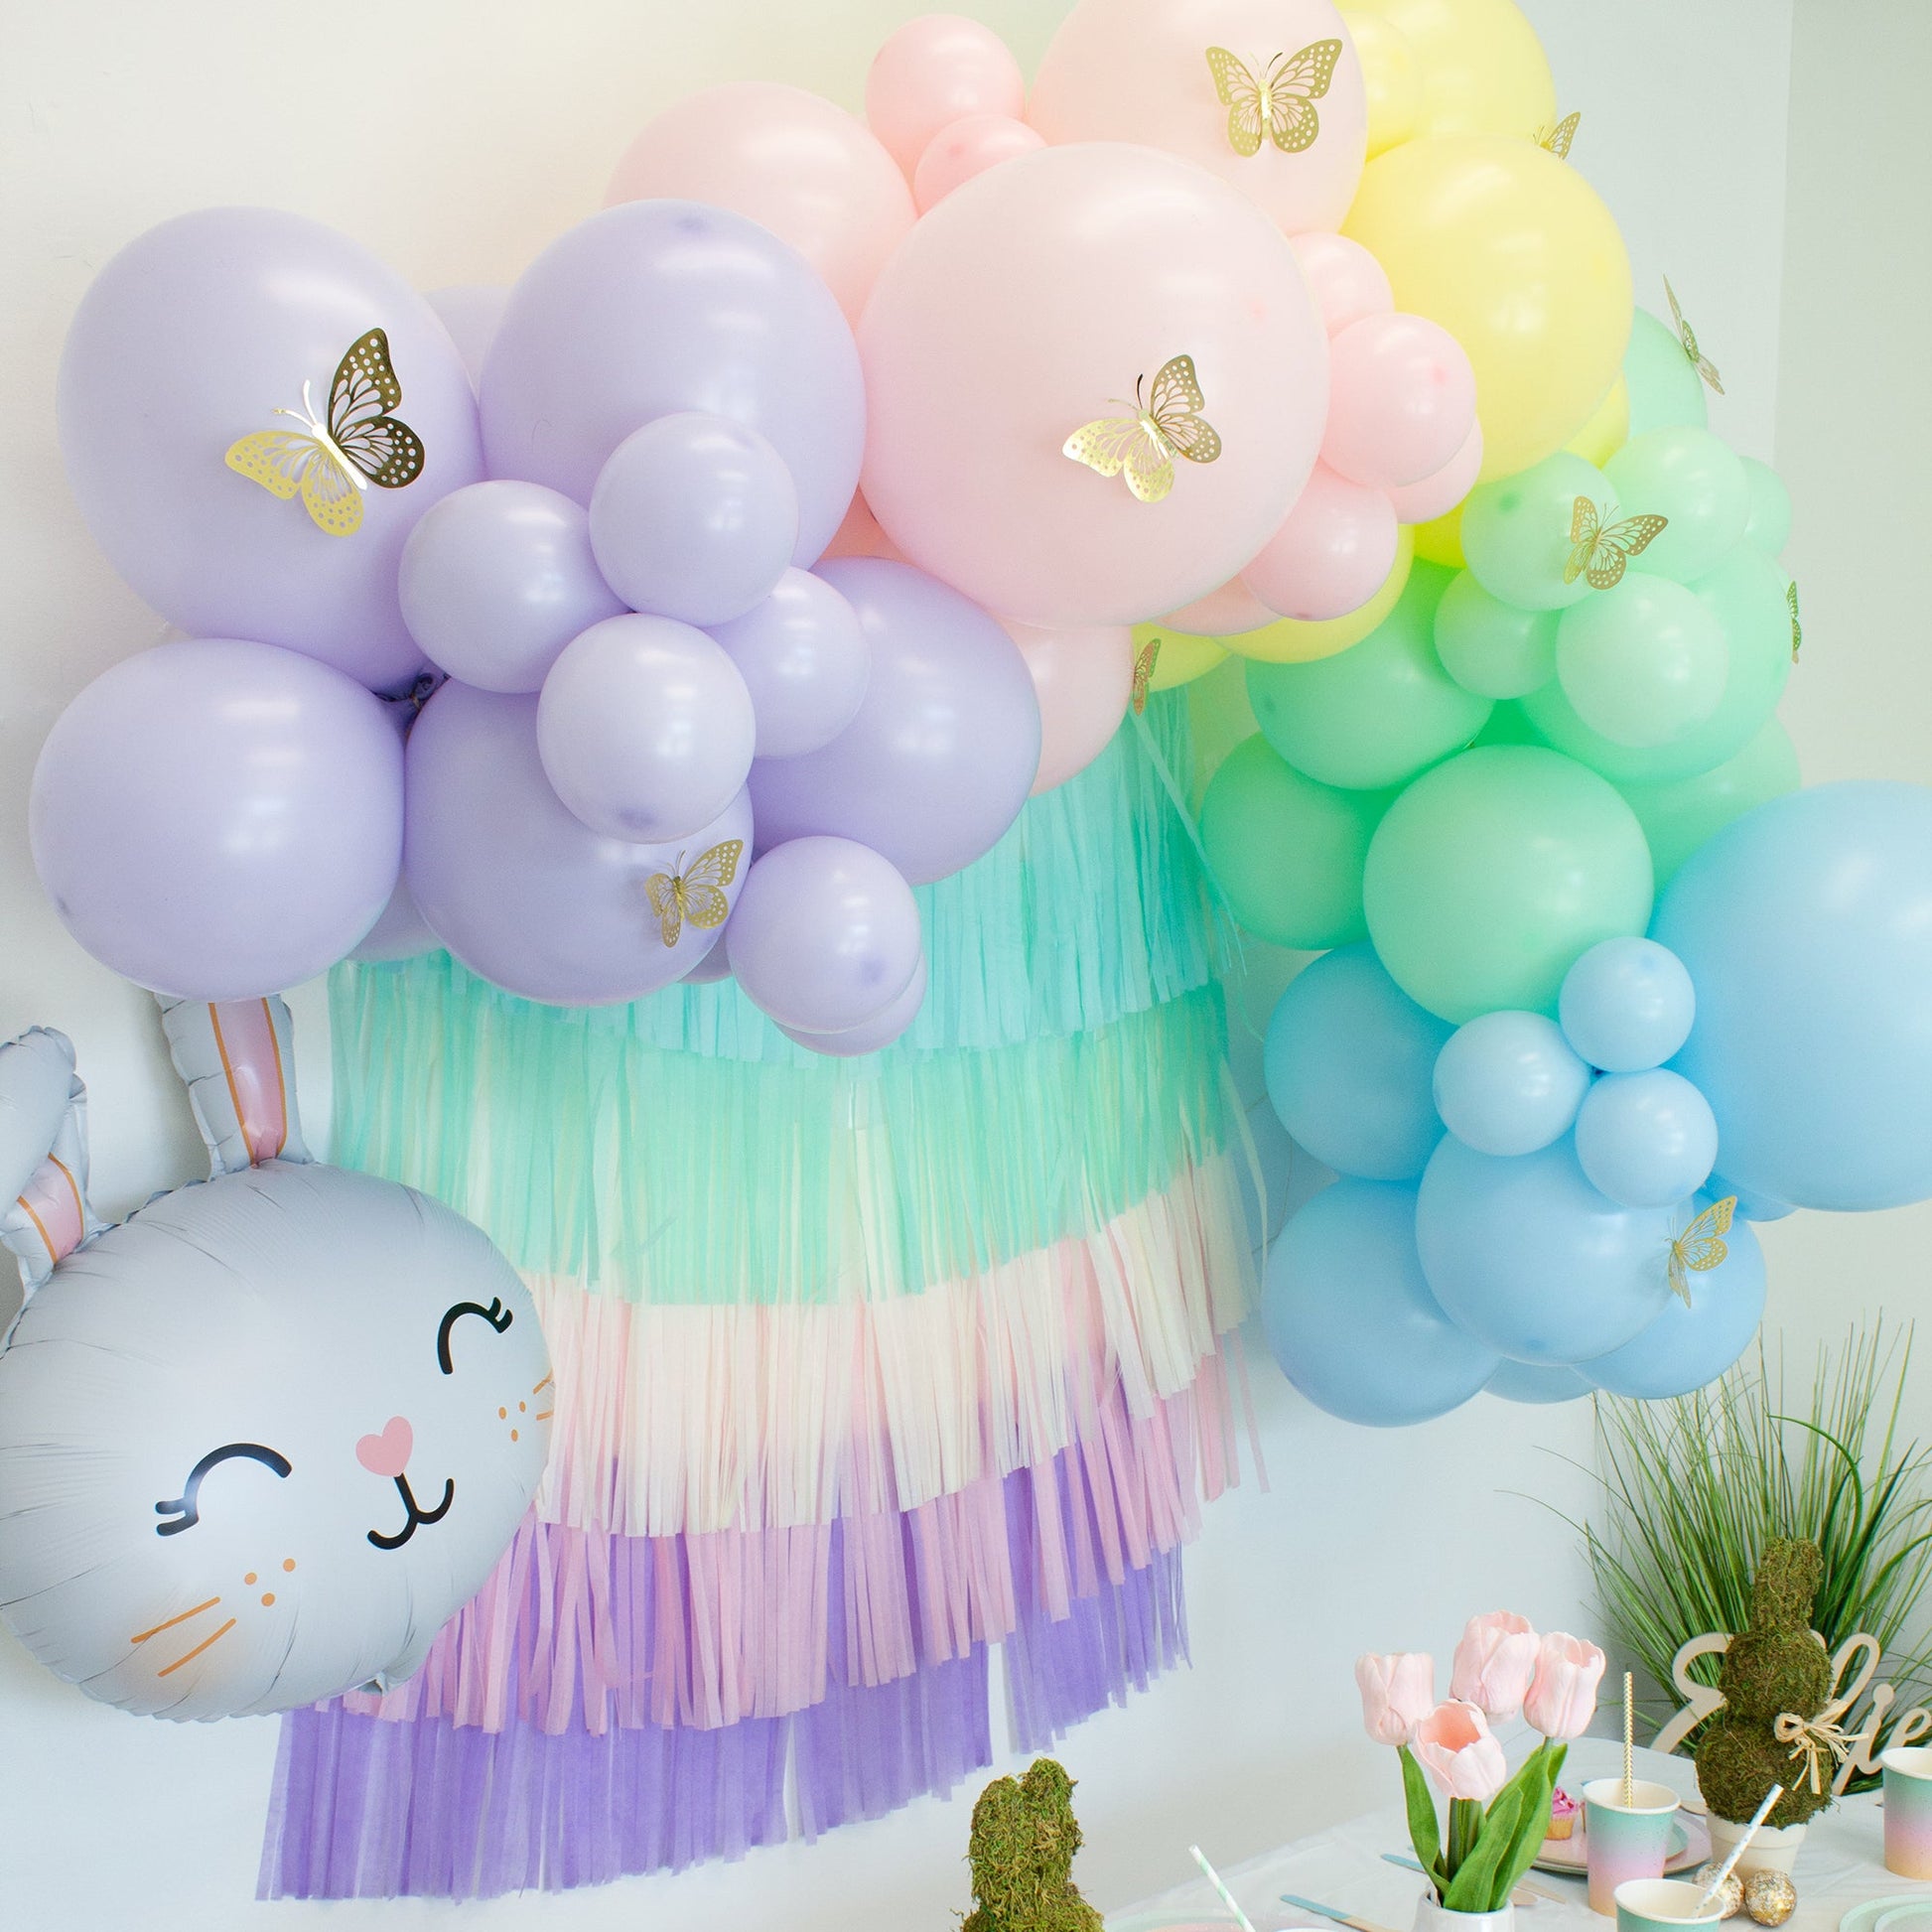 HOUSE OF PARTY 140PCS Pastel Rainbow Balloon Arch Garland Kit - Balloon  Arch Kit - Birthday Balloons, Globos para Decoracion de Fiestas | Ideal for